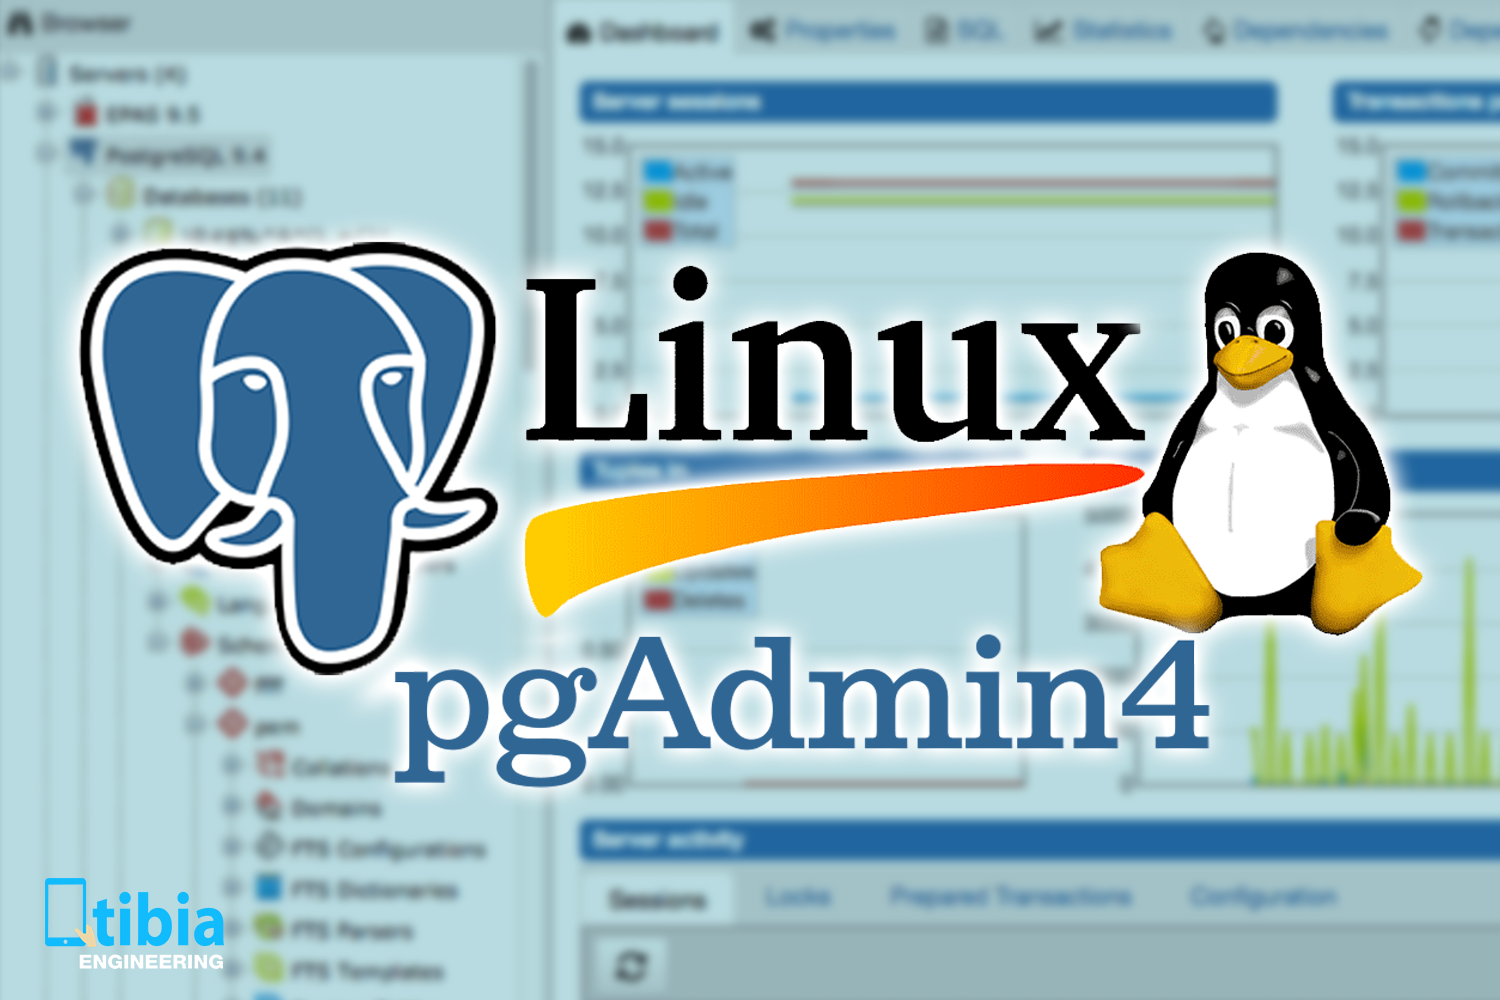 pgadmin 4 not loading linux